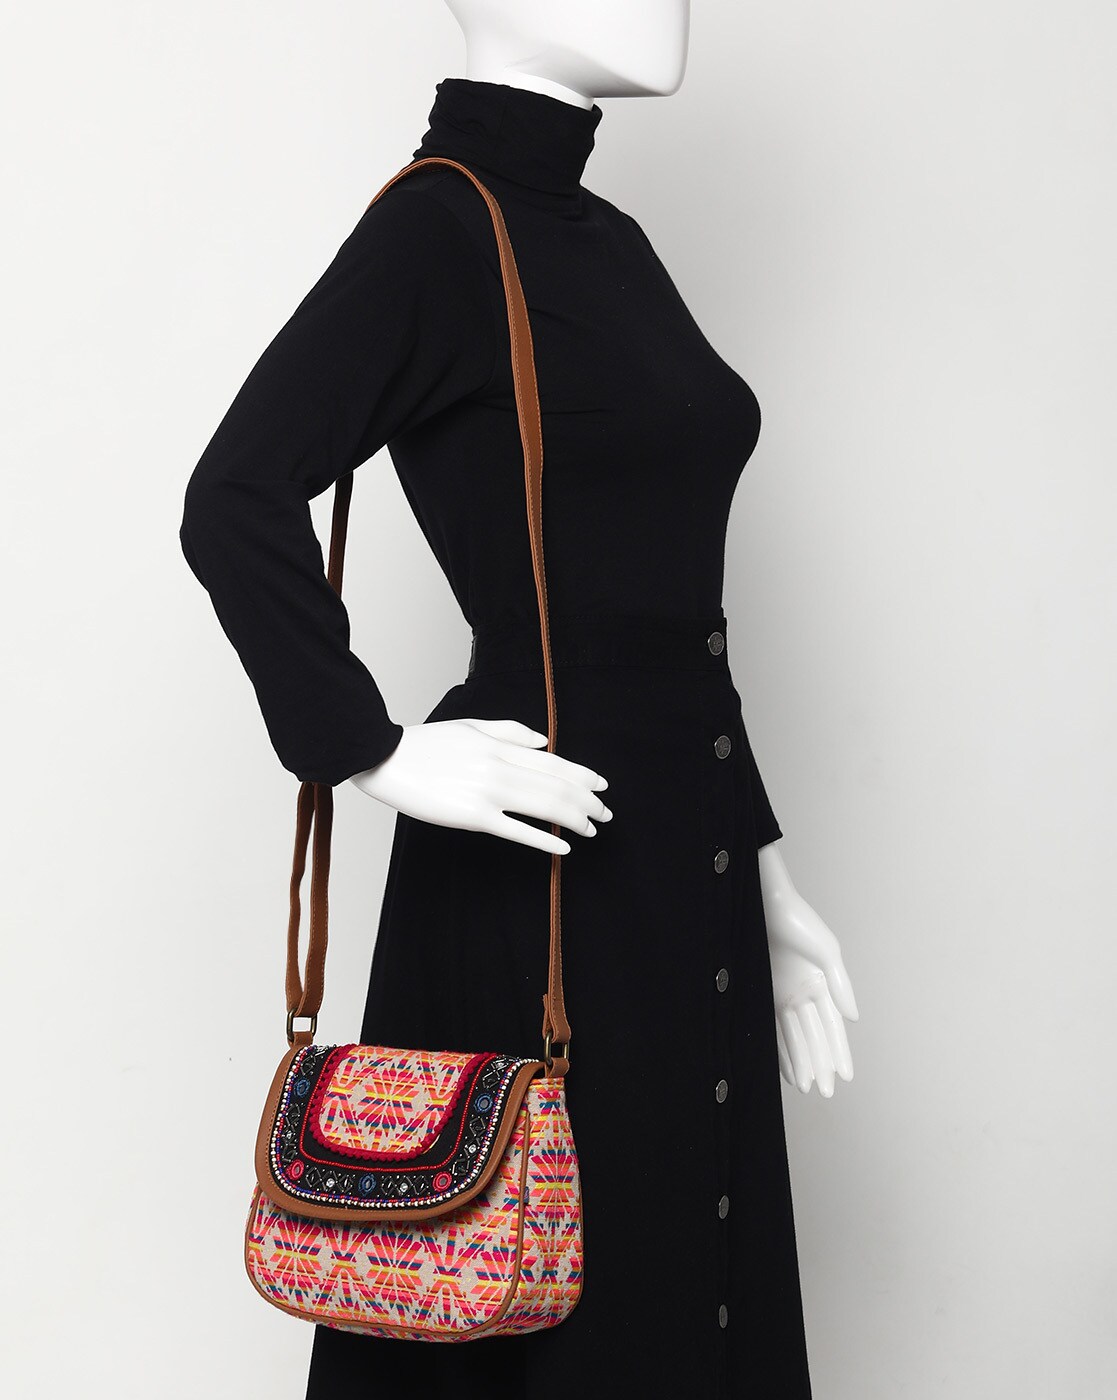 Bring you own...bag! BYOB makes its way into fashion